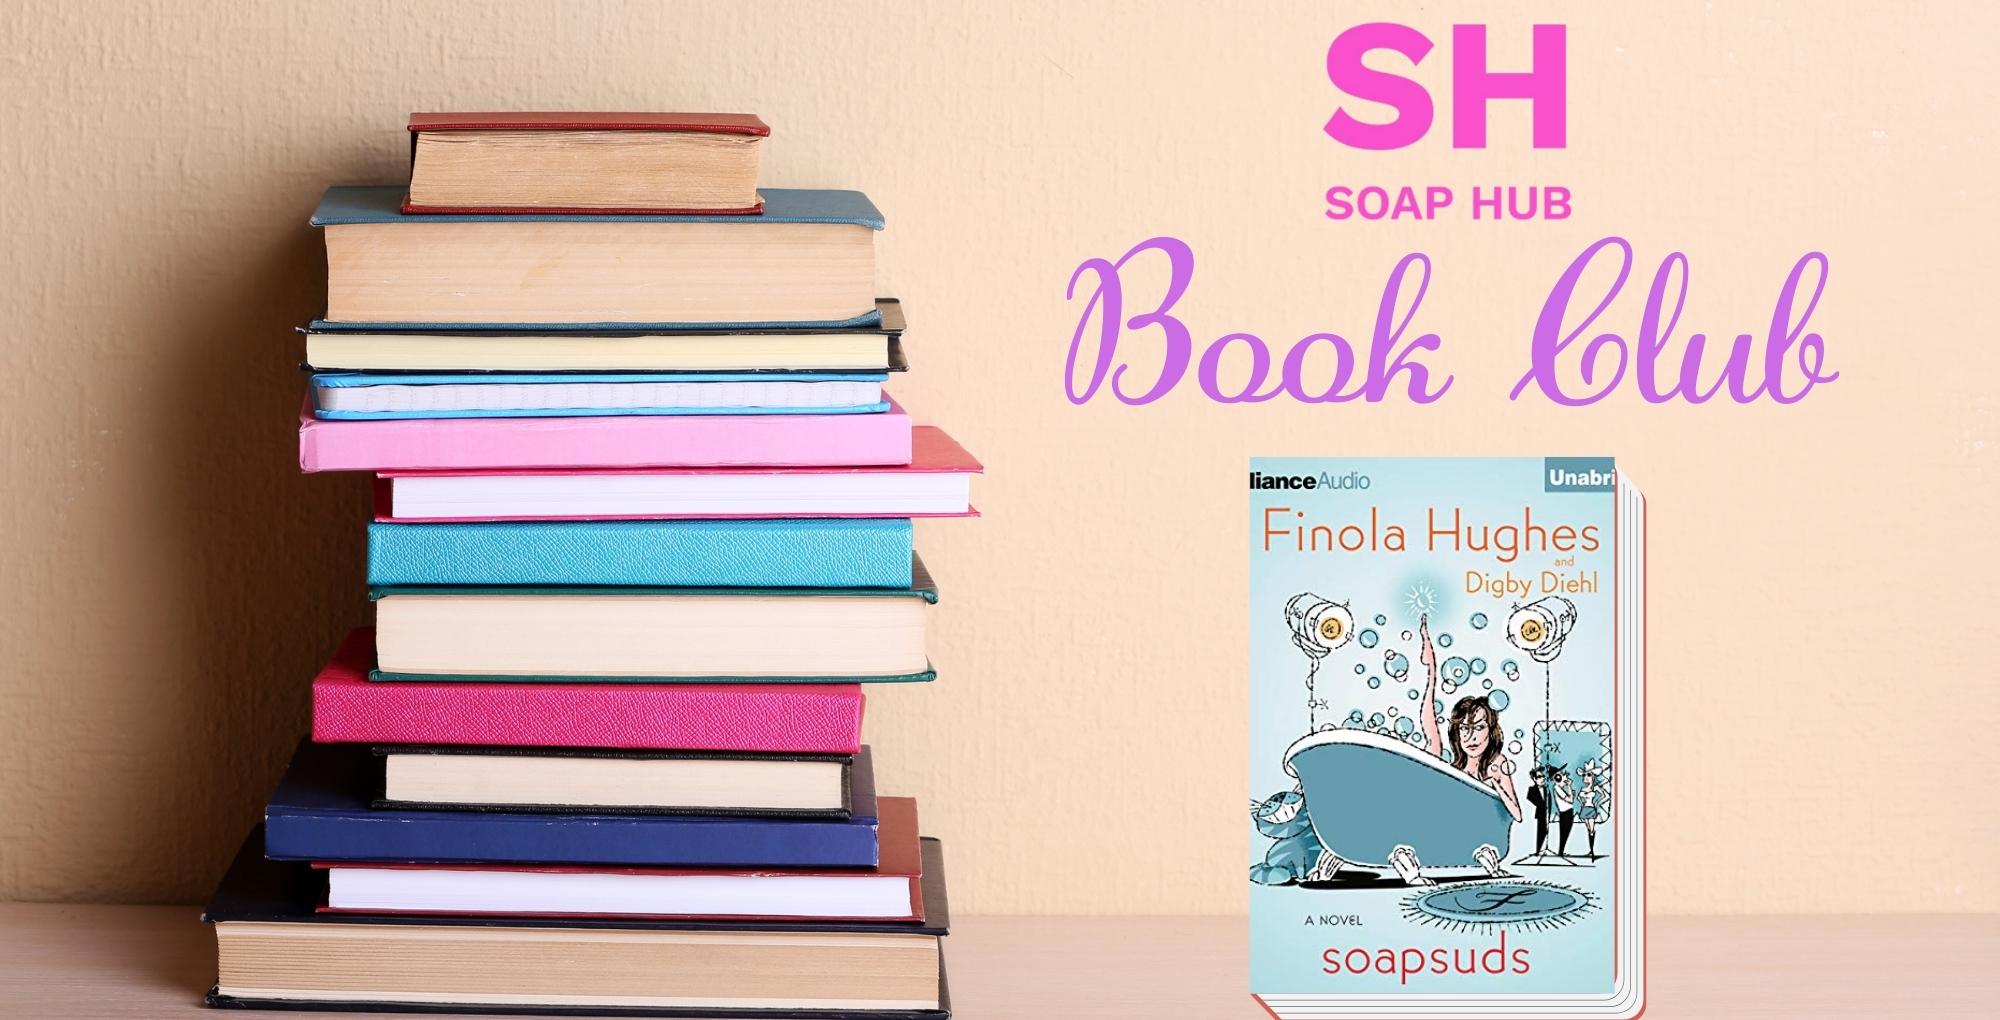 soap hub book club presents finola hughes's tome.